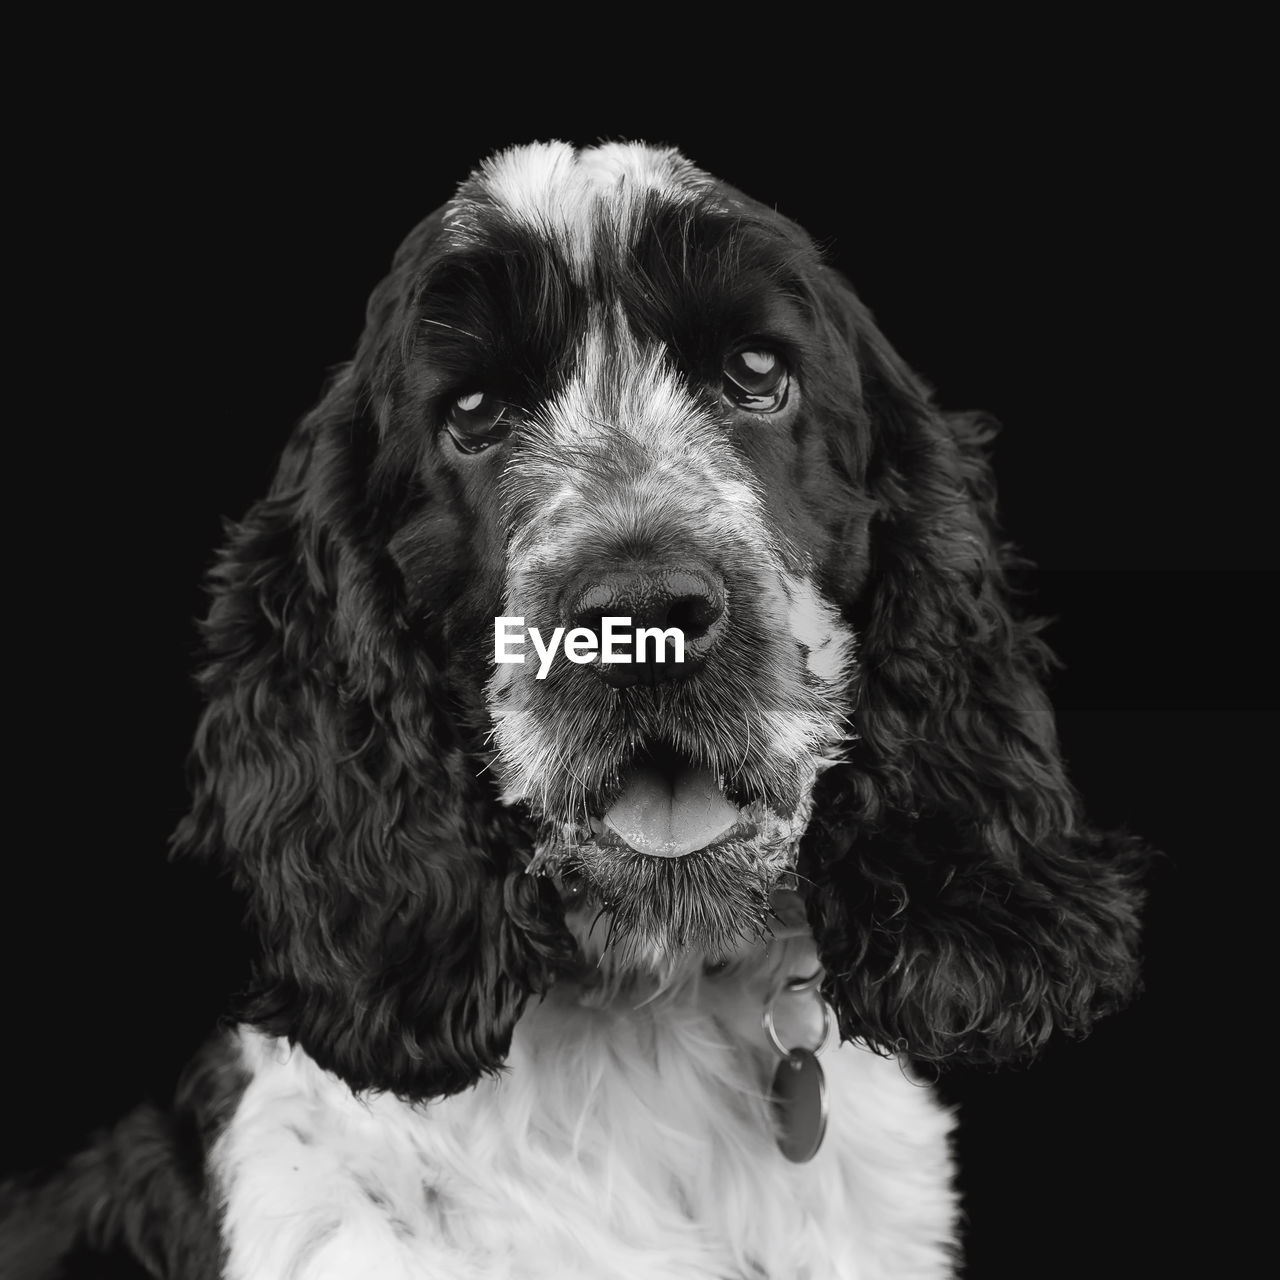 Black and white portrait of a spaniel dog